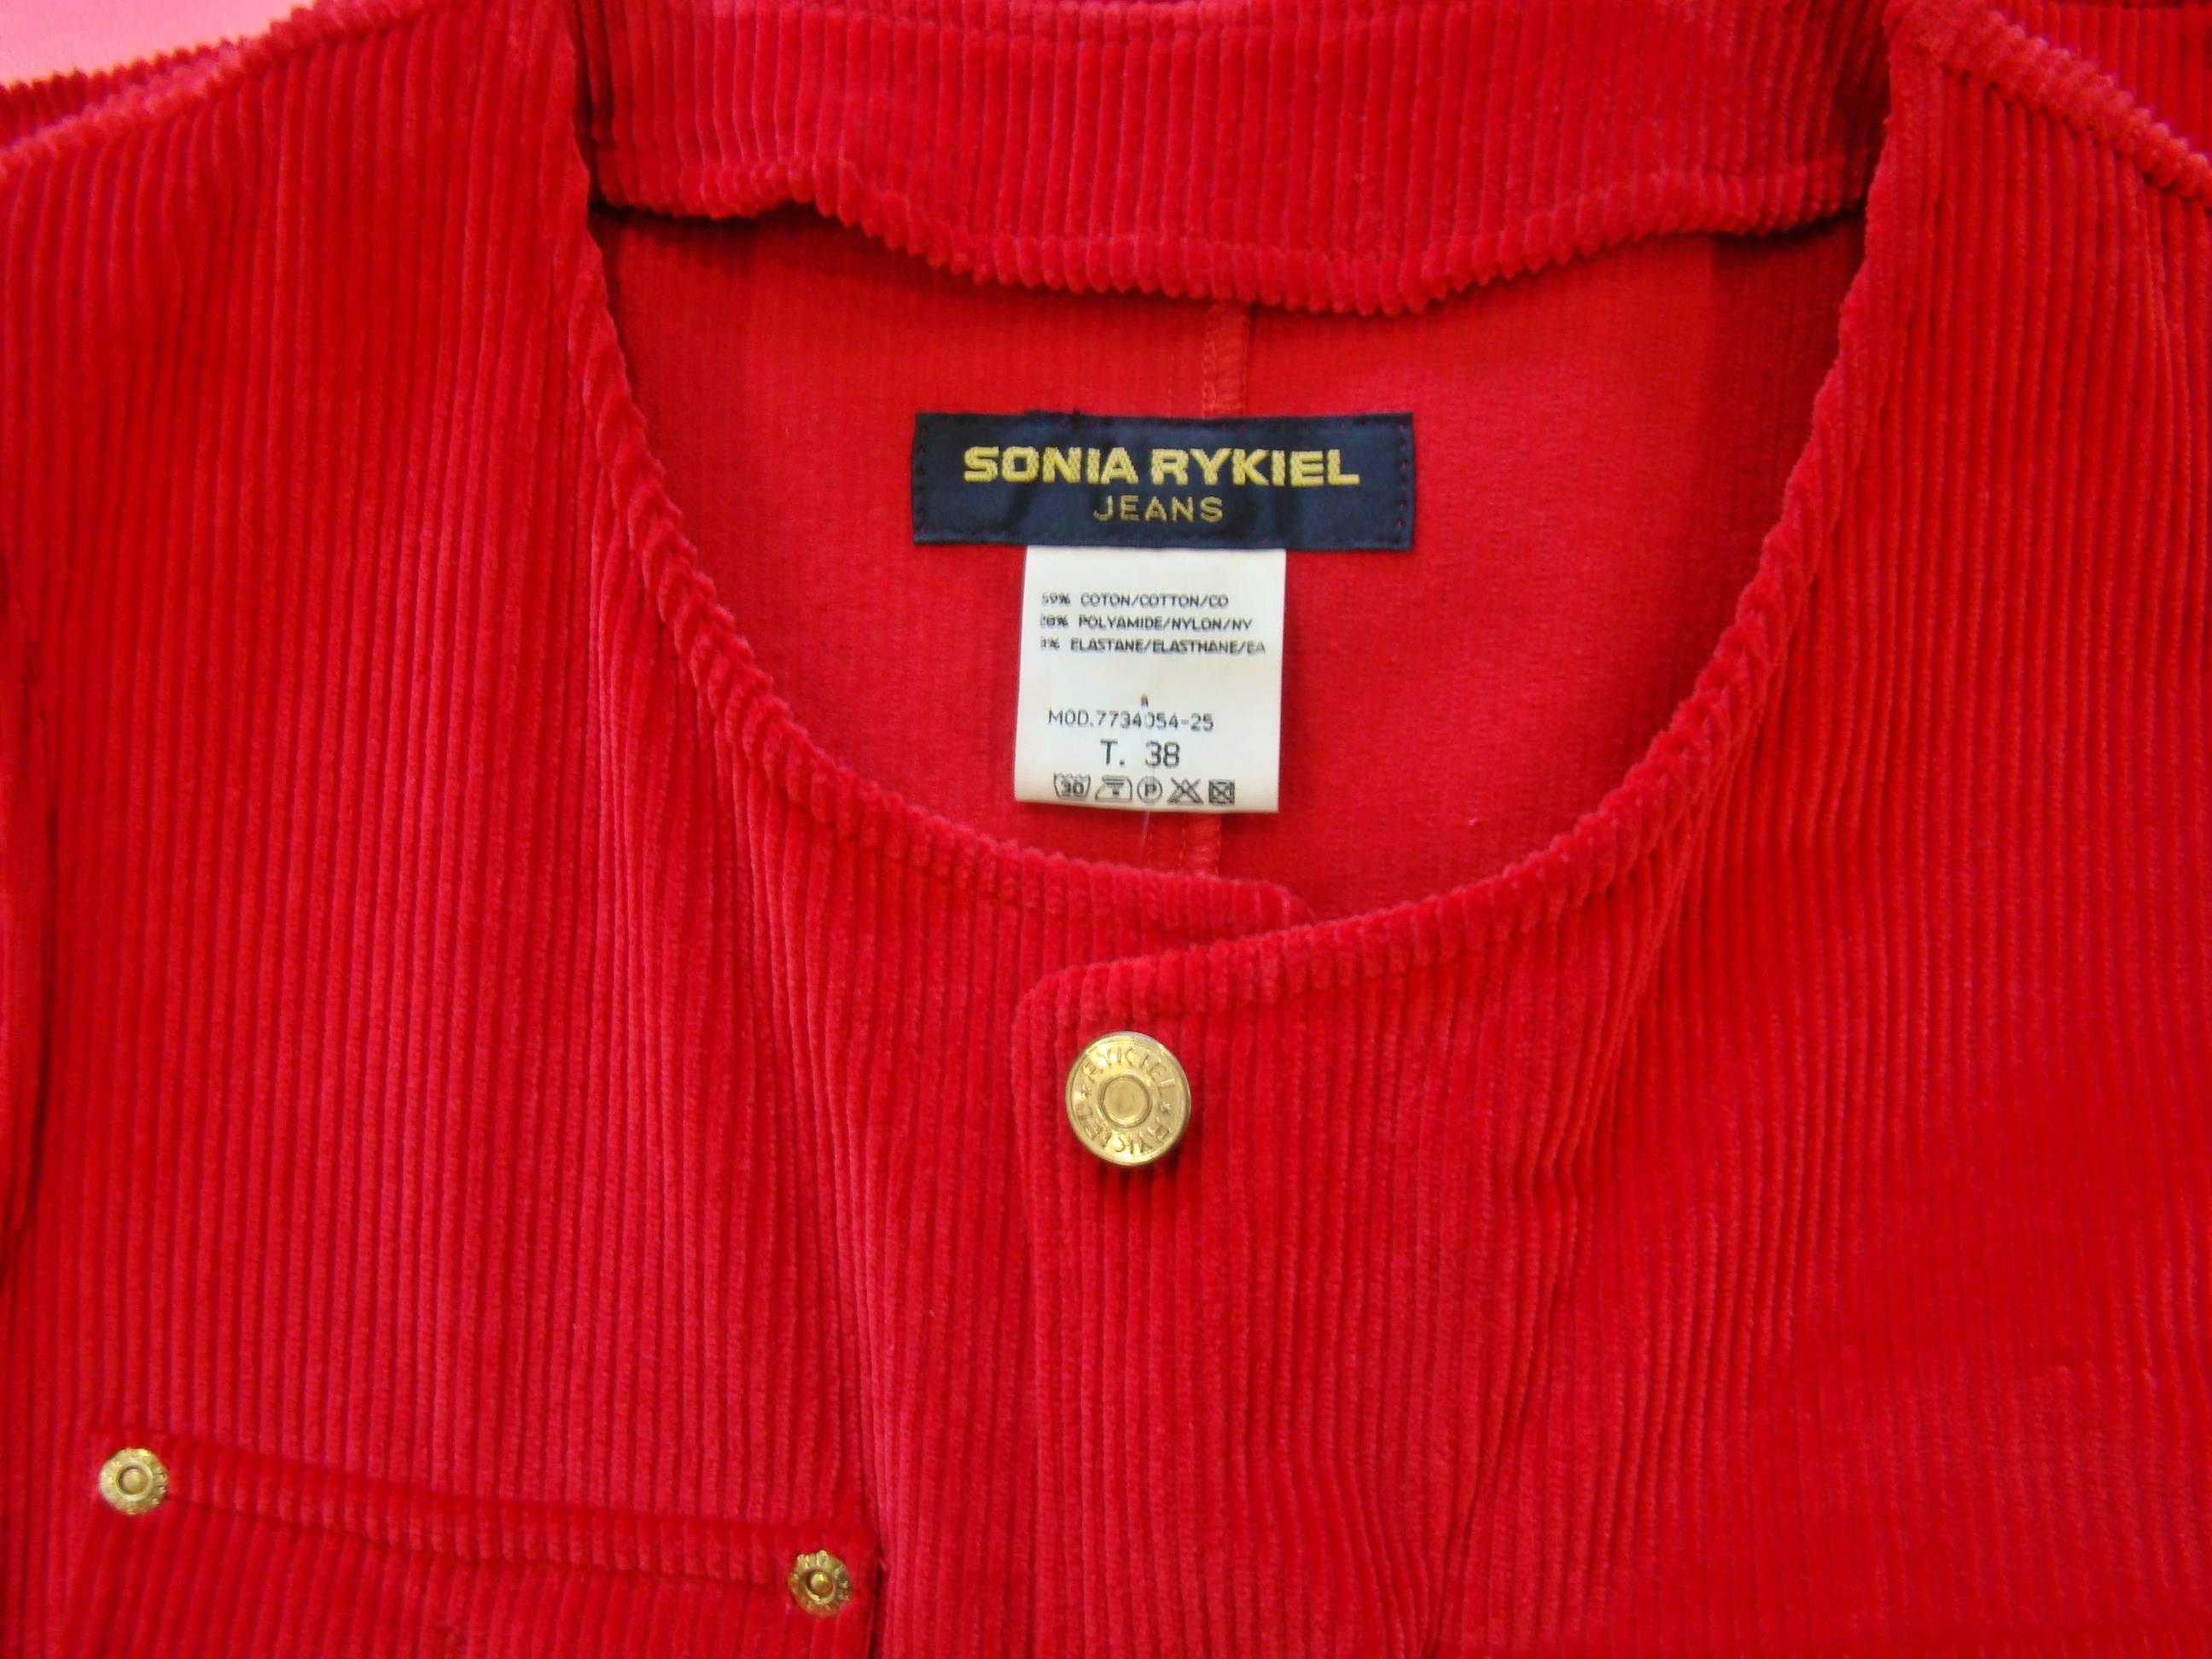 Sonia Rykiel Red Bengaline Dress For Sale 3